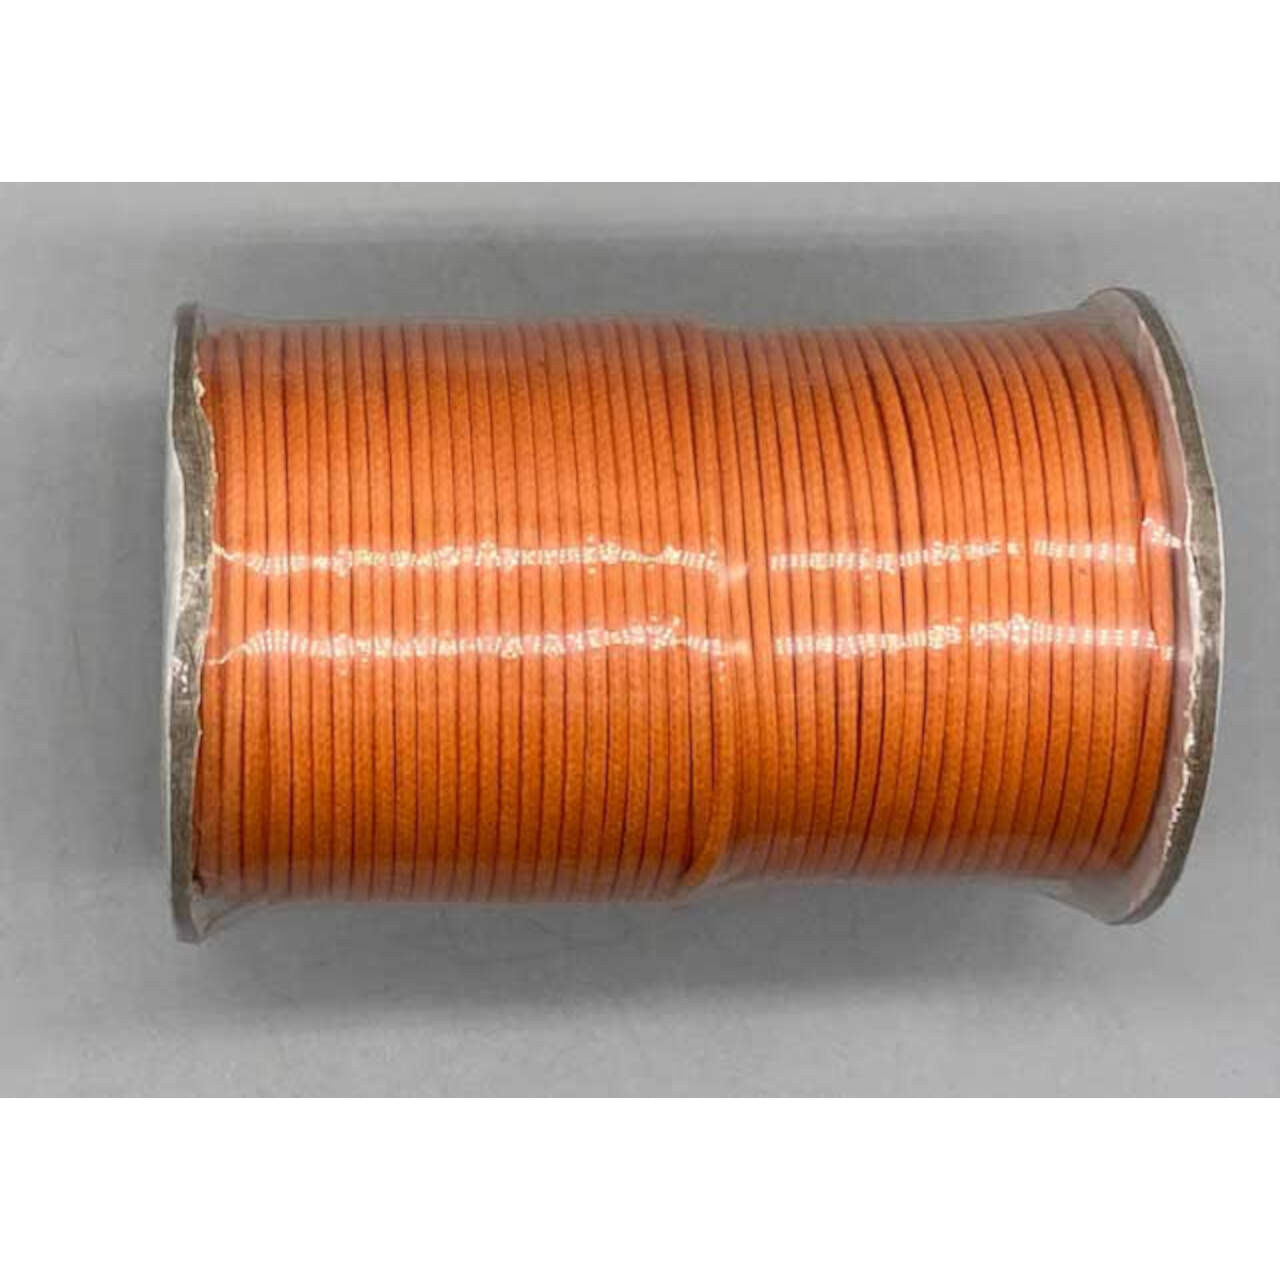 Orange Waxed Cotton Cord 2 mm. 100 Yds